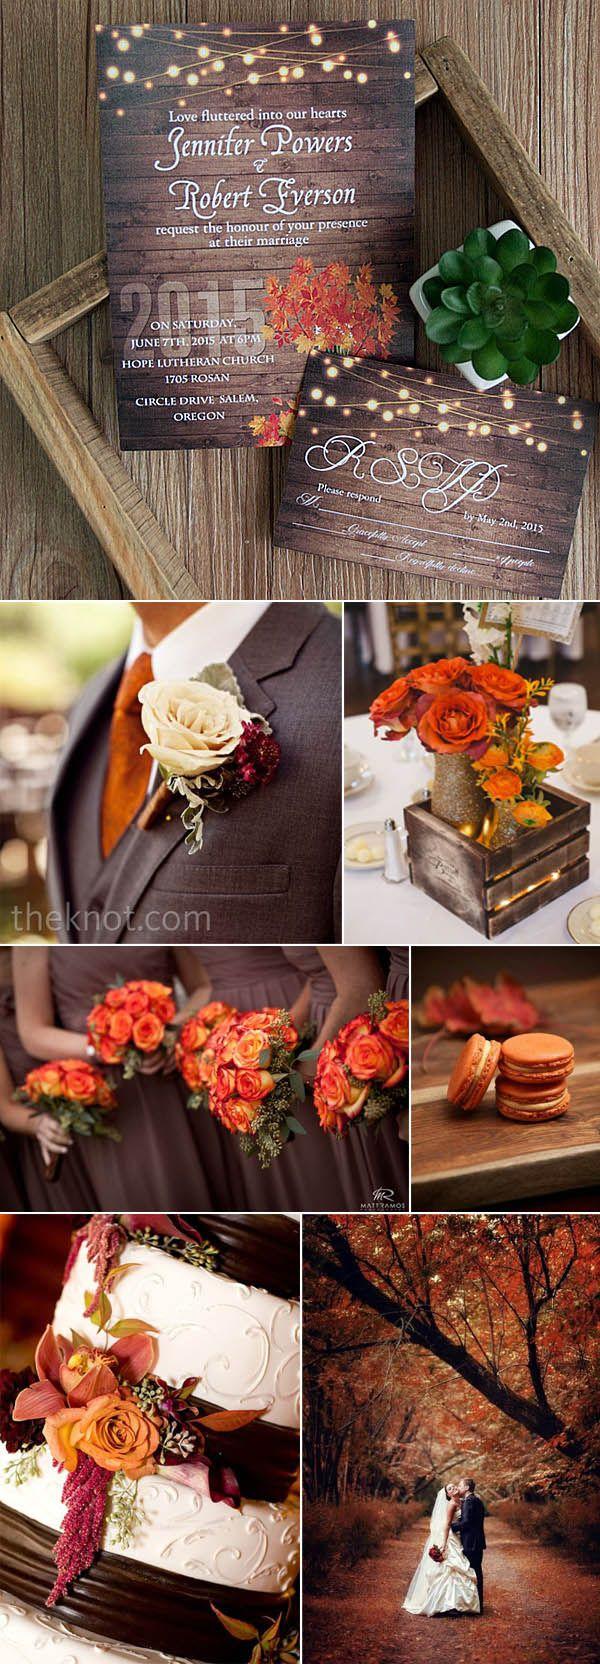 زفاف - Ten Beautiful Fall Wedding Invitations To Match Your Wedding Colors